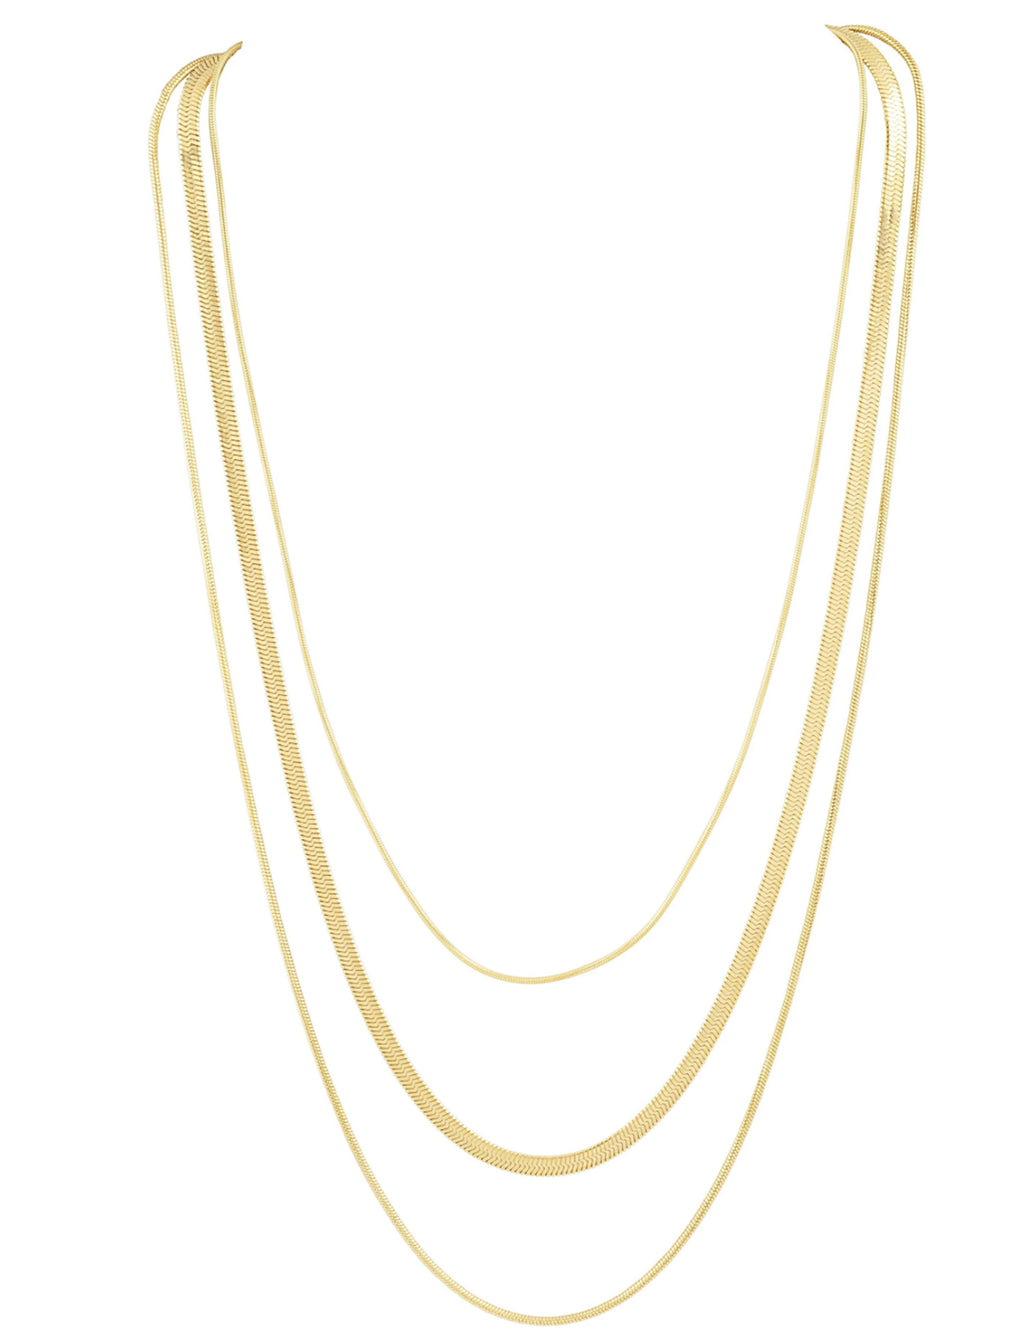 Rio Multi Chain Necklace, Gold Plated